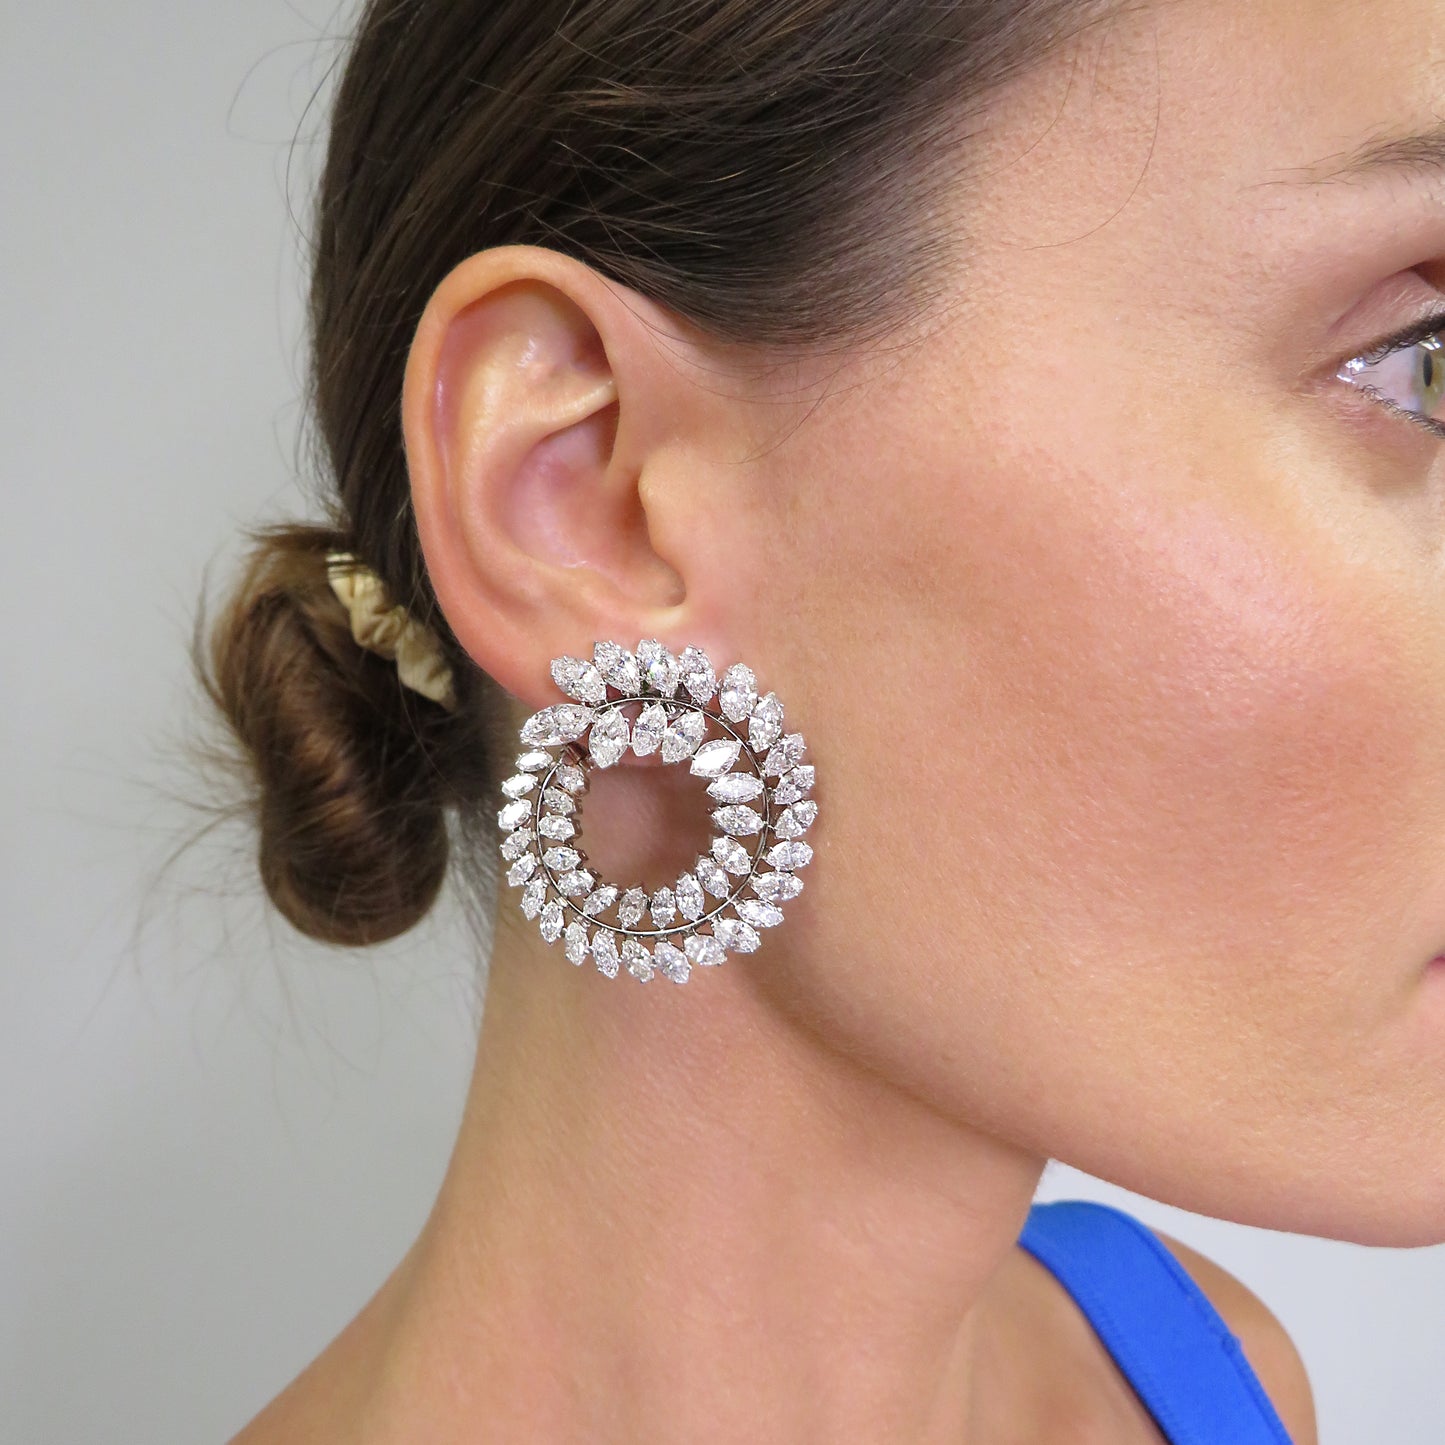 1950s Platinum Diamond Swirl Earrings worn on ear